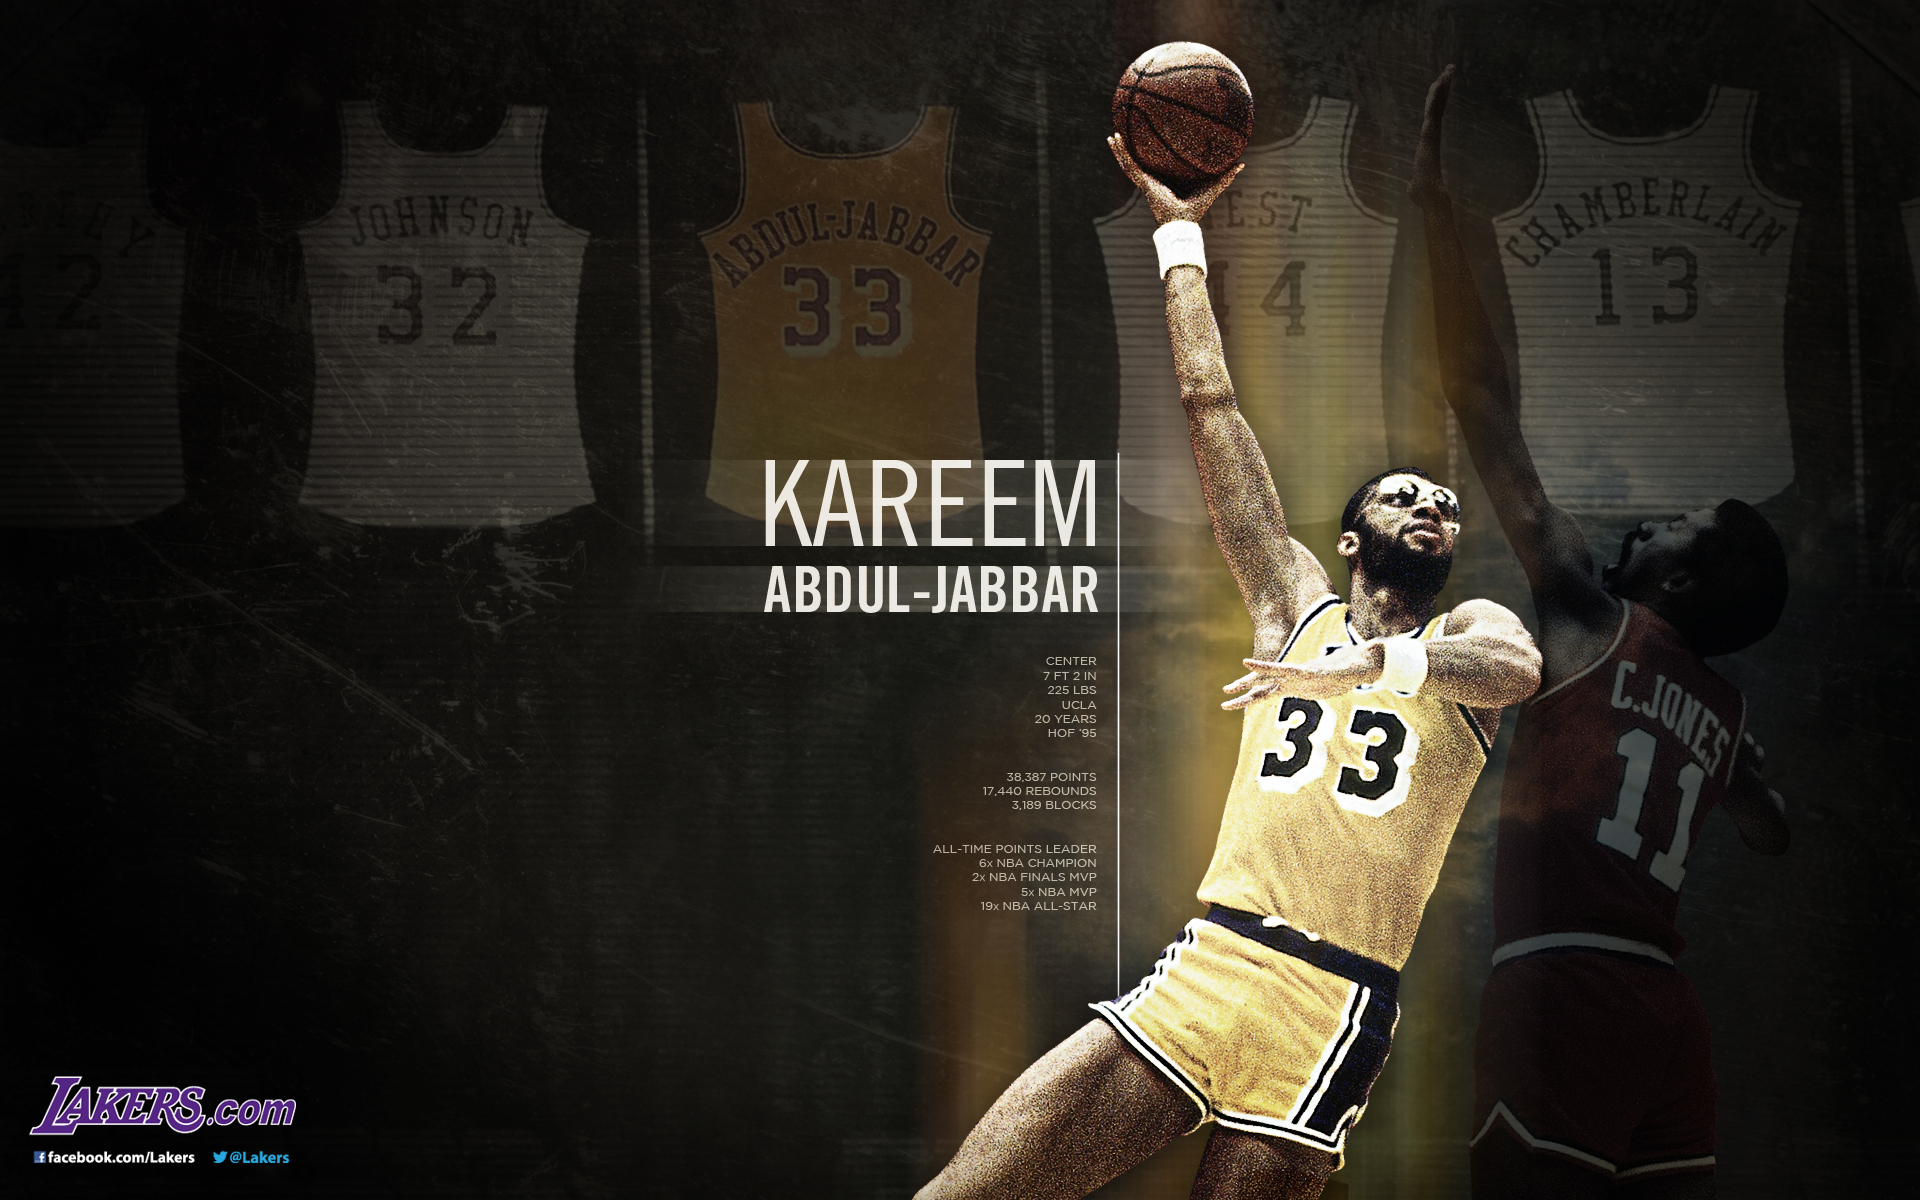 The legendary basketball player Kareem Abdul Jabbar wallpapers and